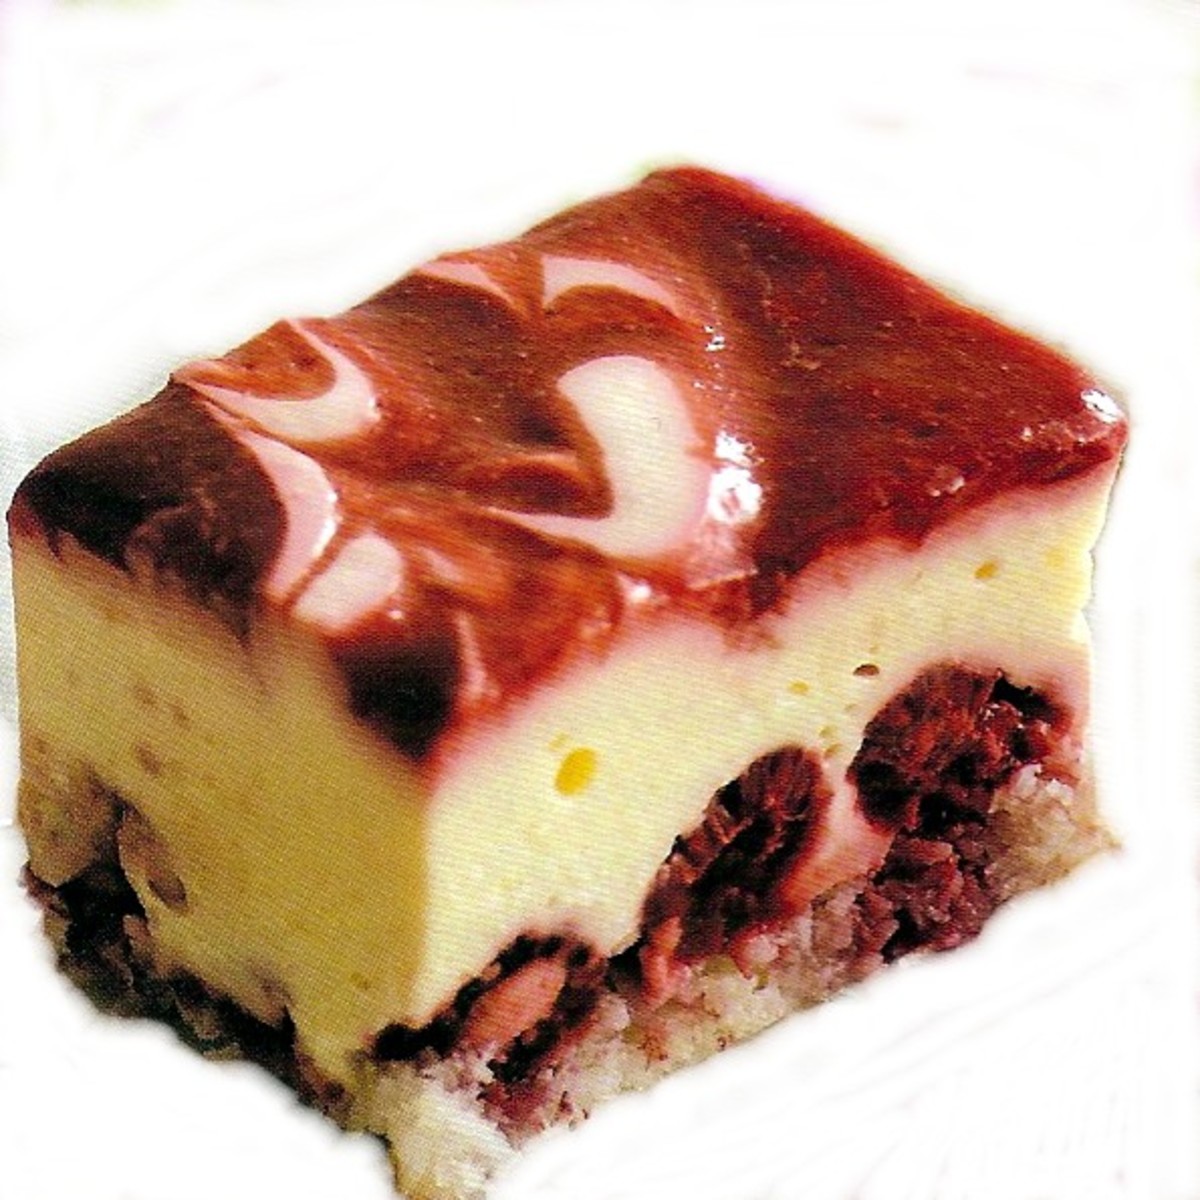 Delicious Gluten Free Desserts Raspberry Cheesecake Recipe